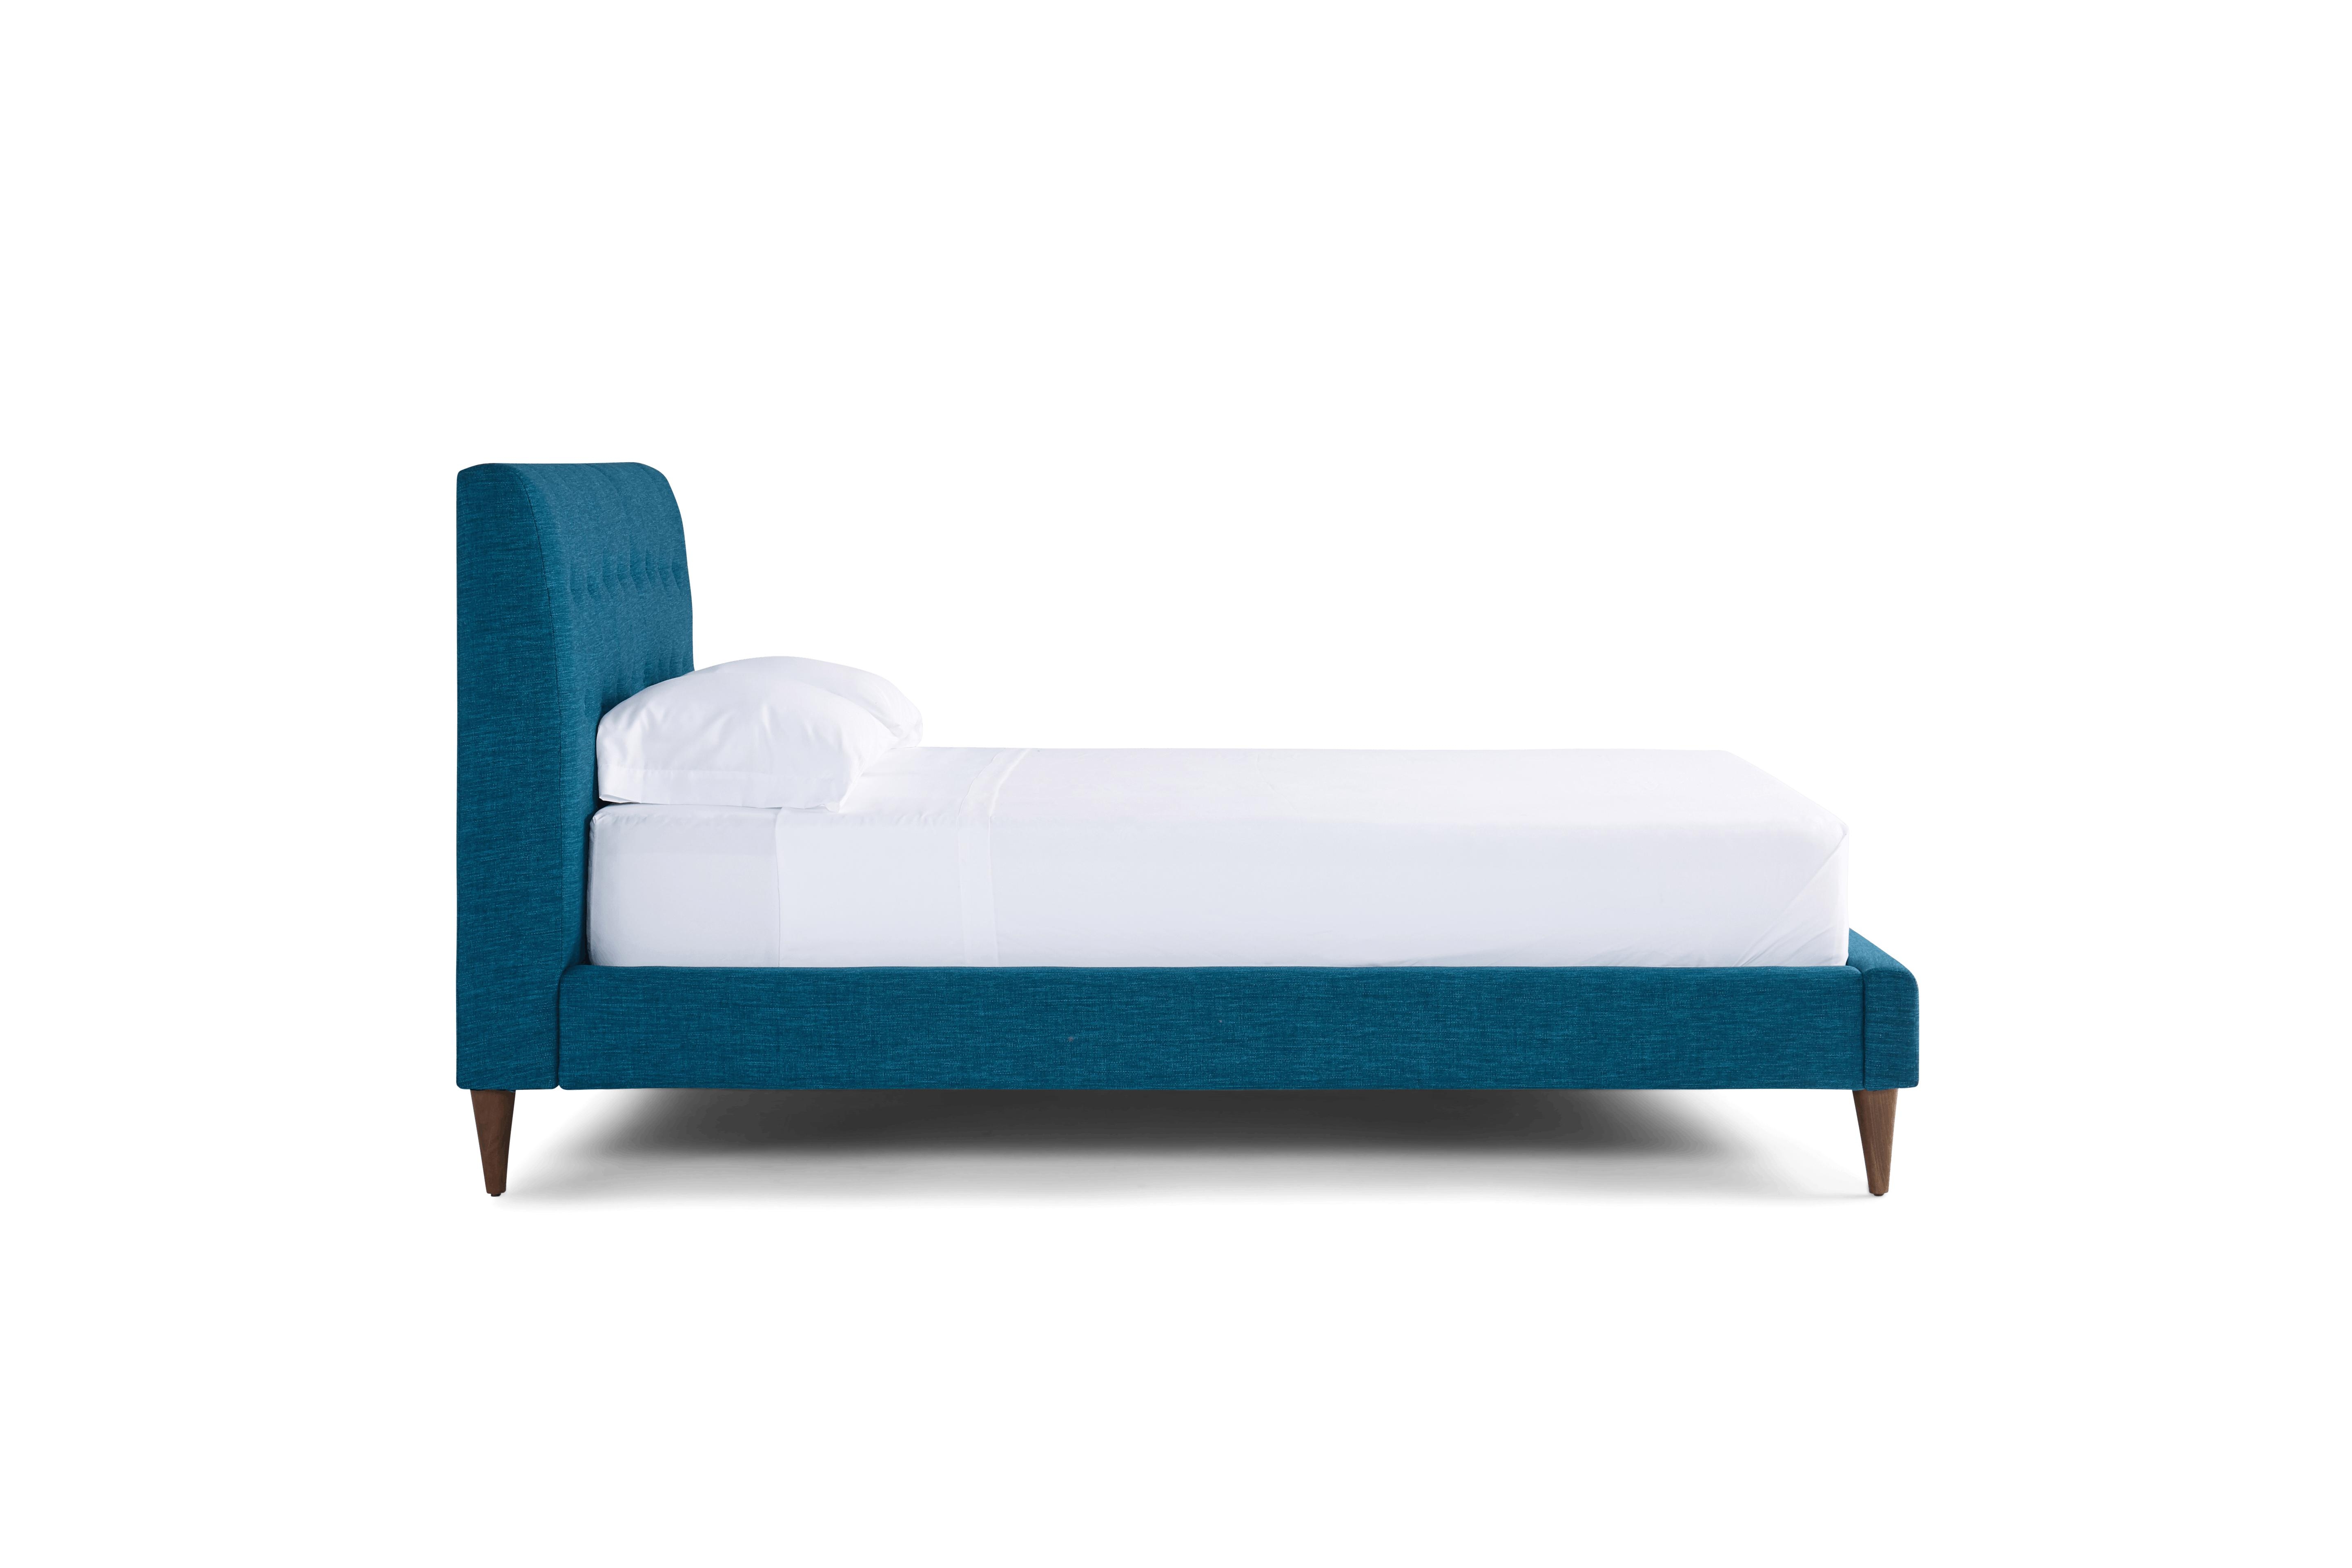 Blue Eliot Mid Century Modern Bed - Key Largo Zenith Teal - Mocha - Cal King - Image 2